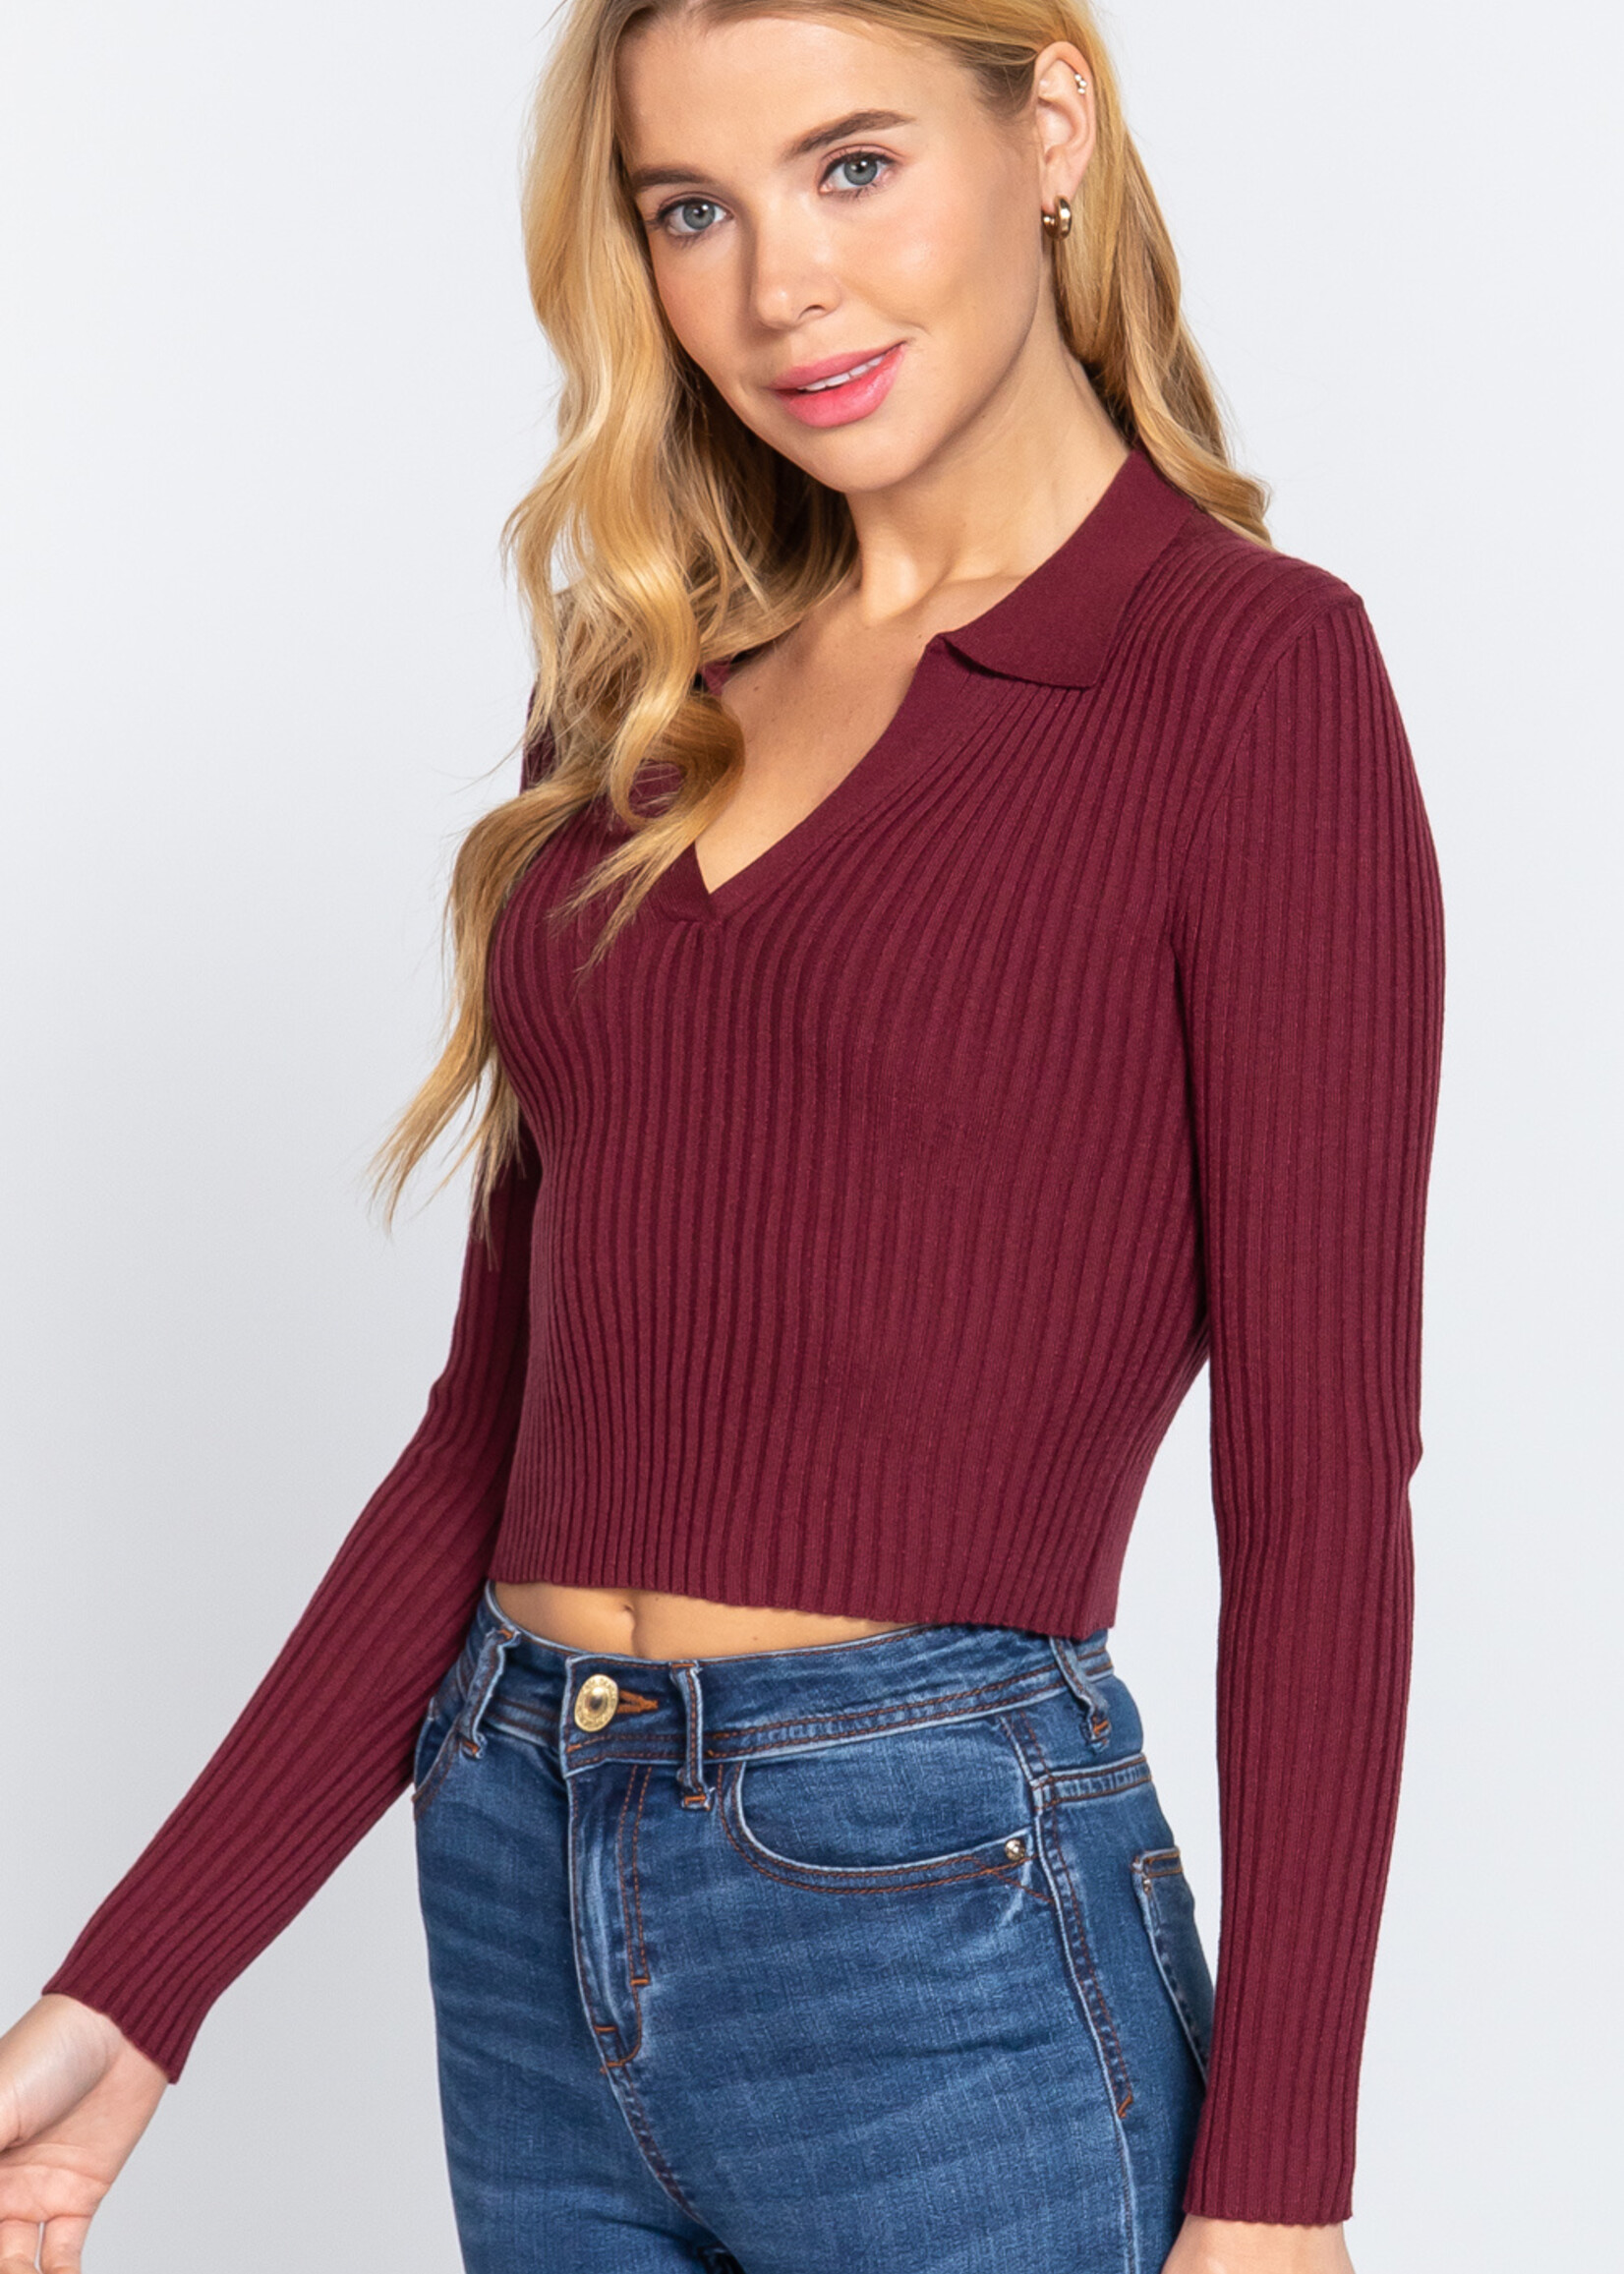 Knox Rose Sweatshirt M Medium Maroon Pullover Relaxed Fit Lace Trim Hi-Low  Women